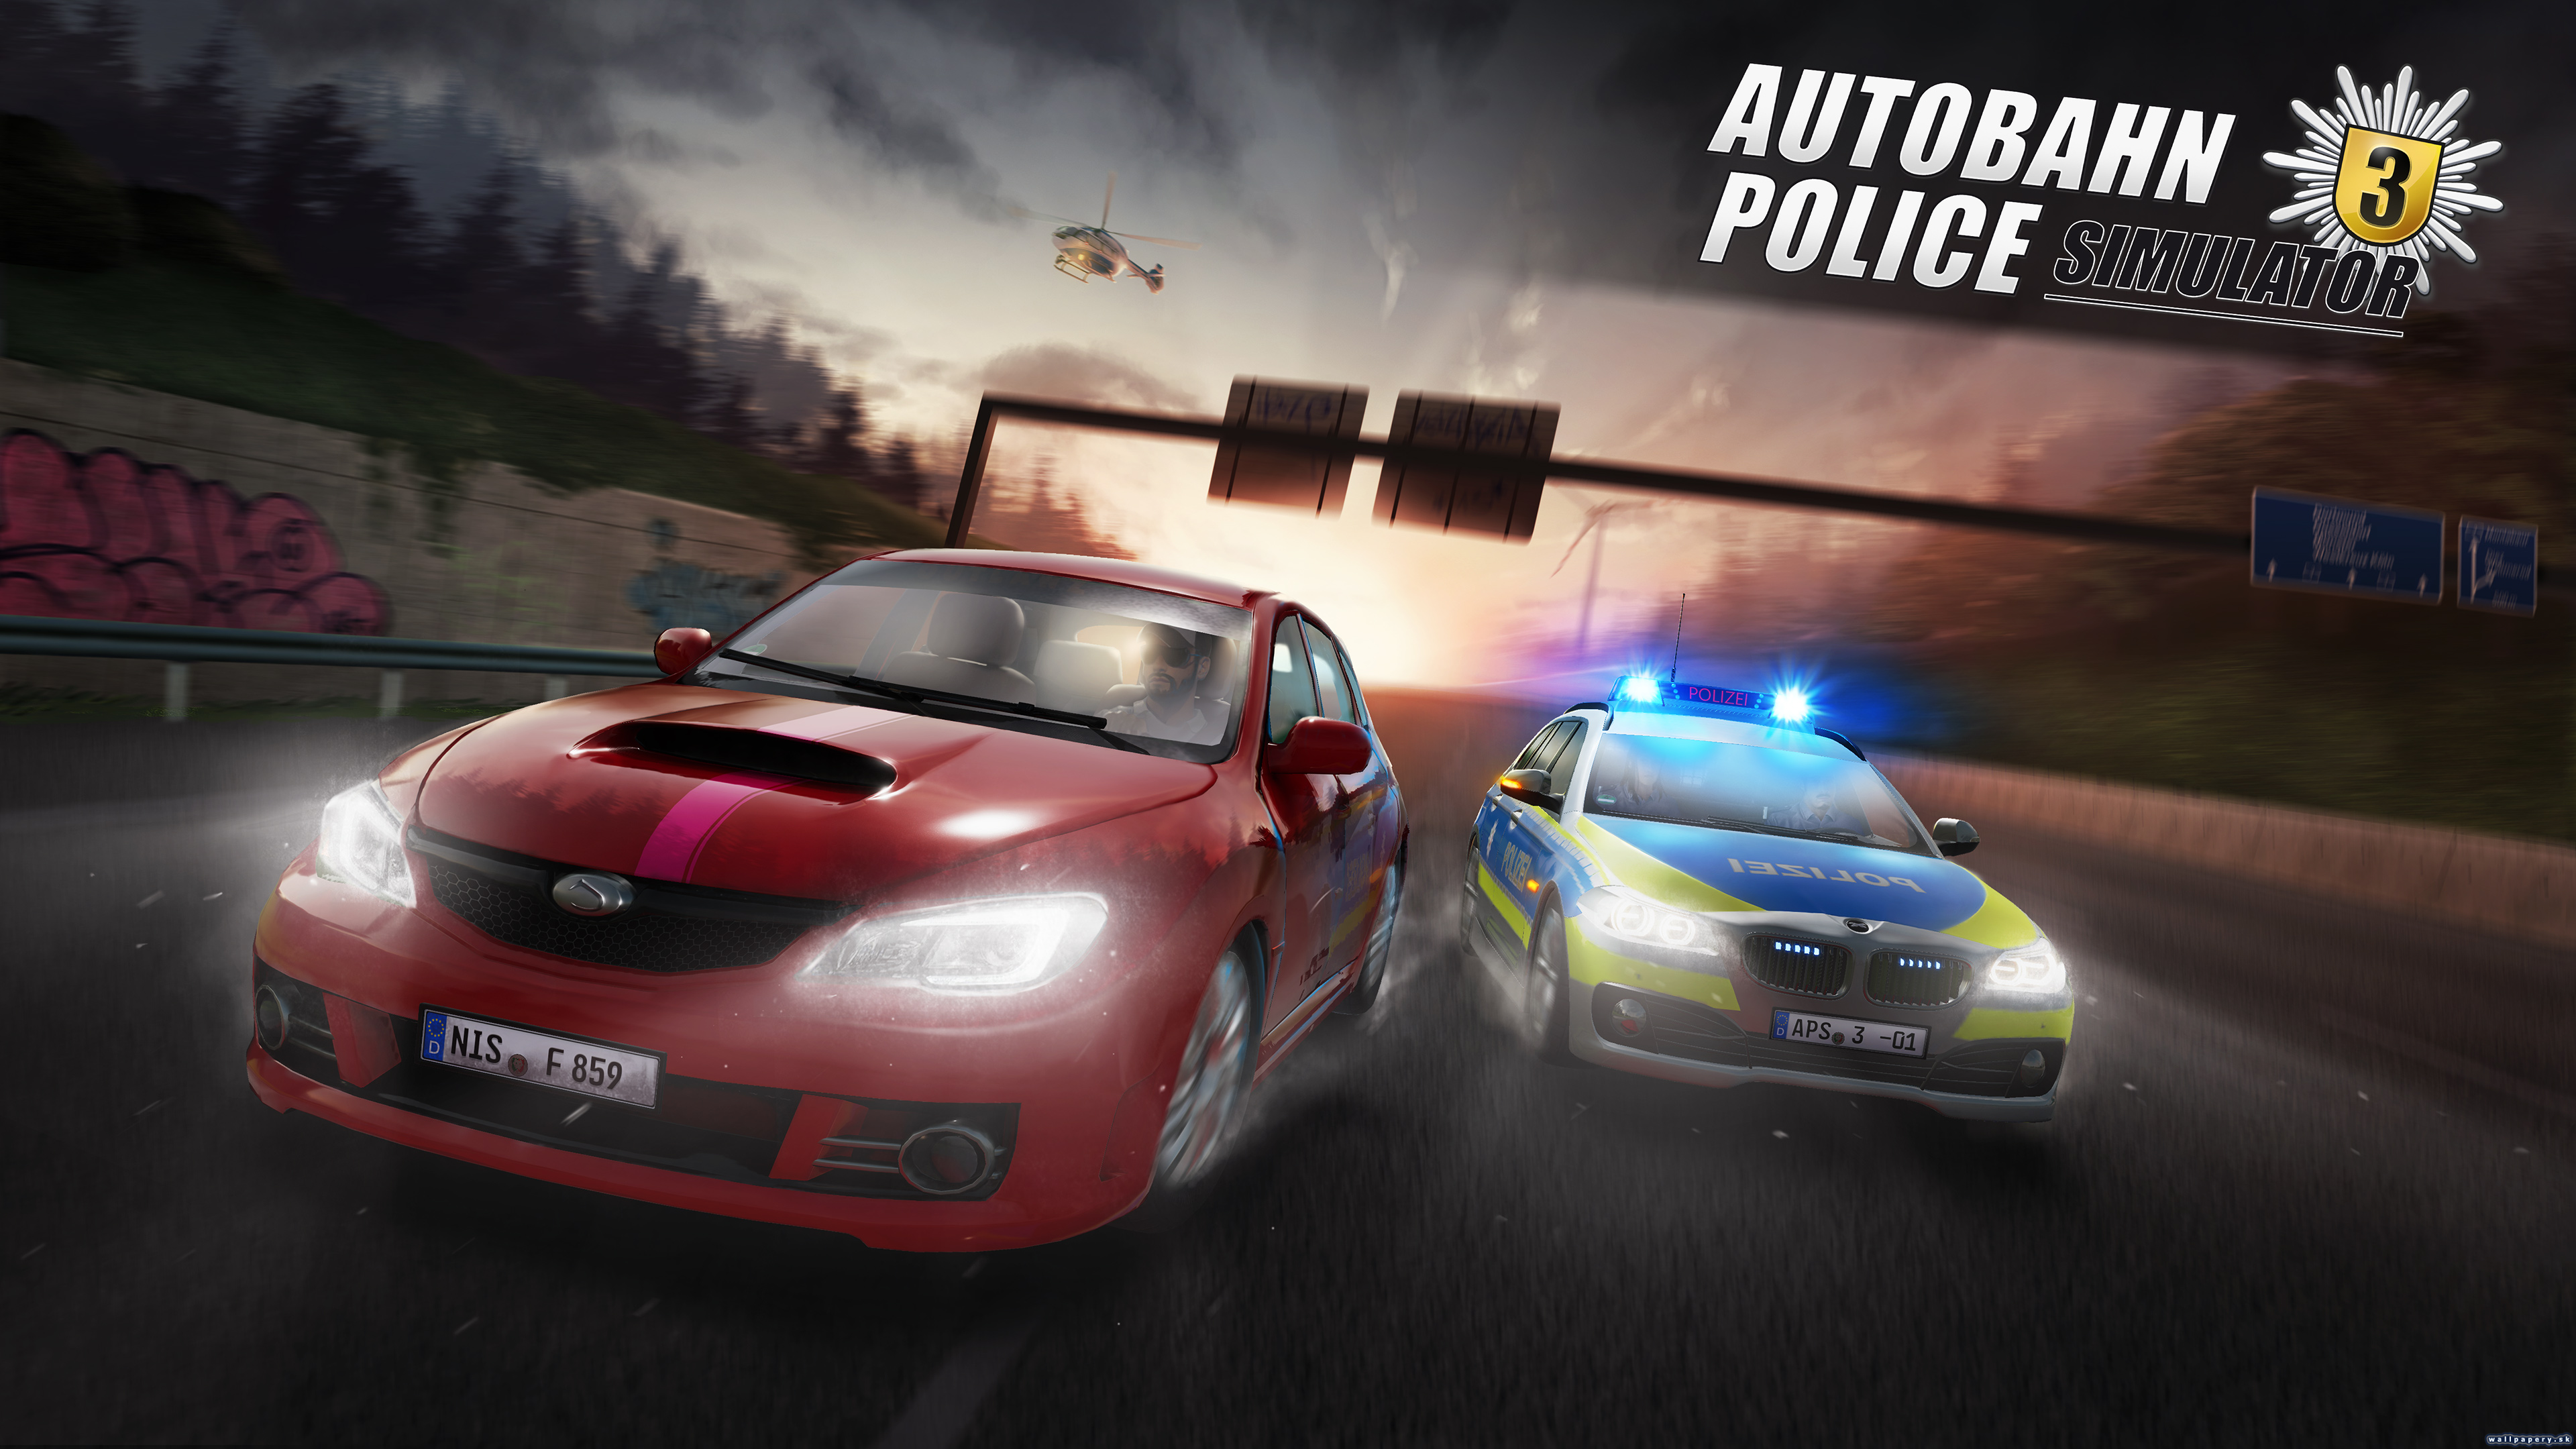 Autobahn Police Simulator 3 - wallpaper 1